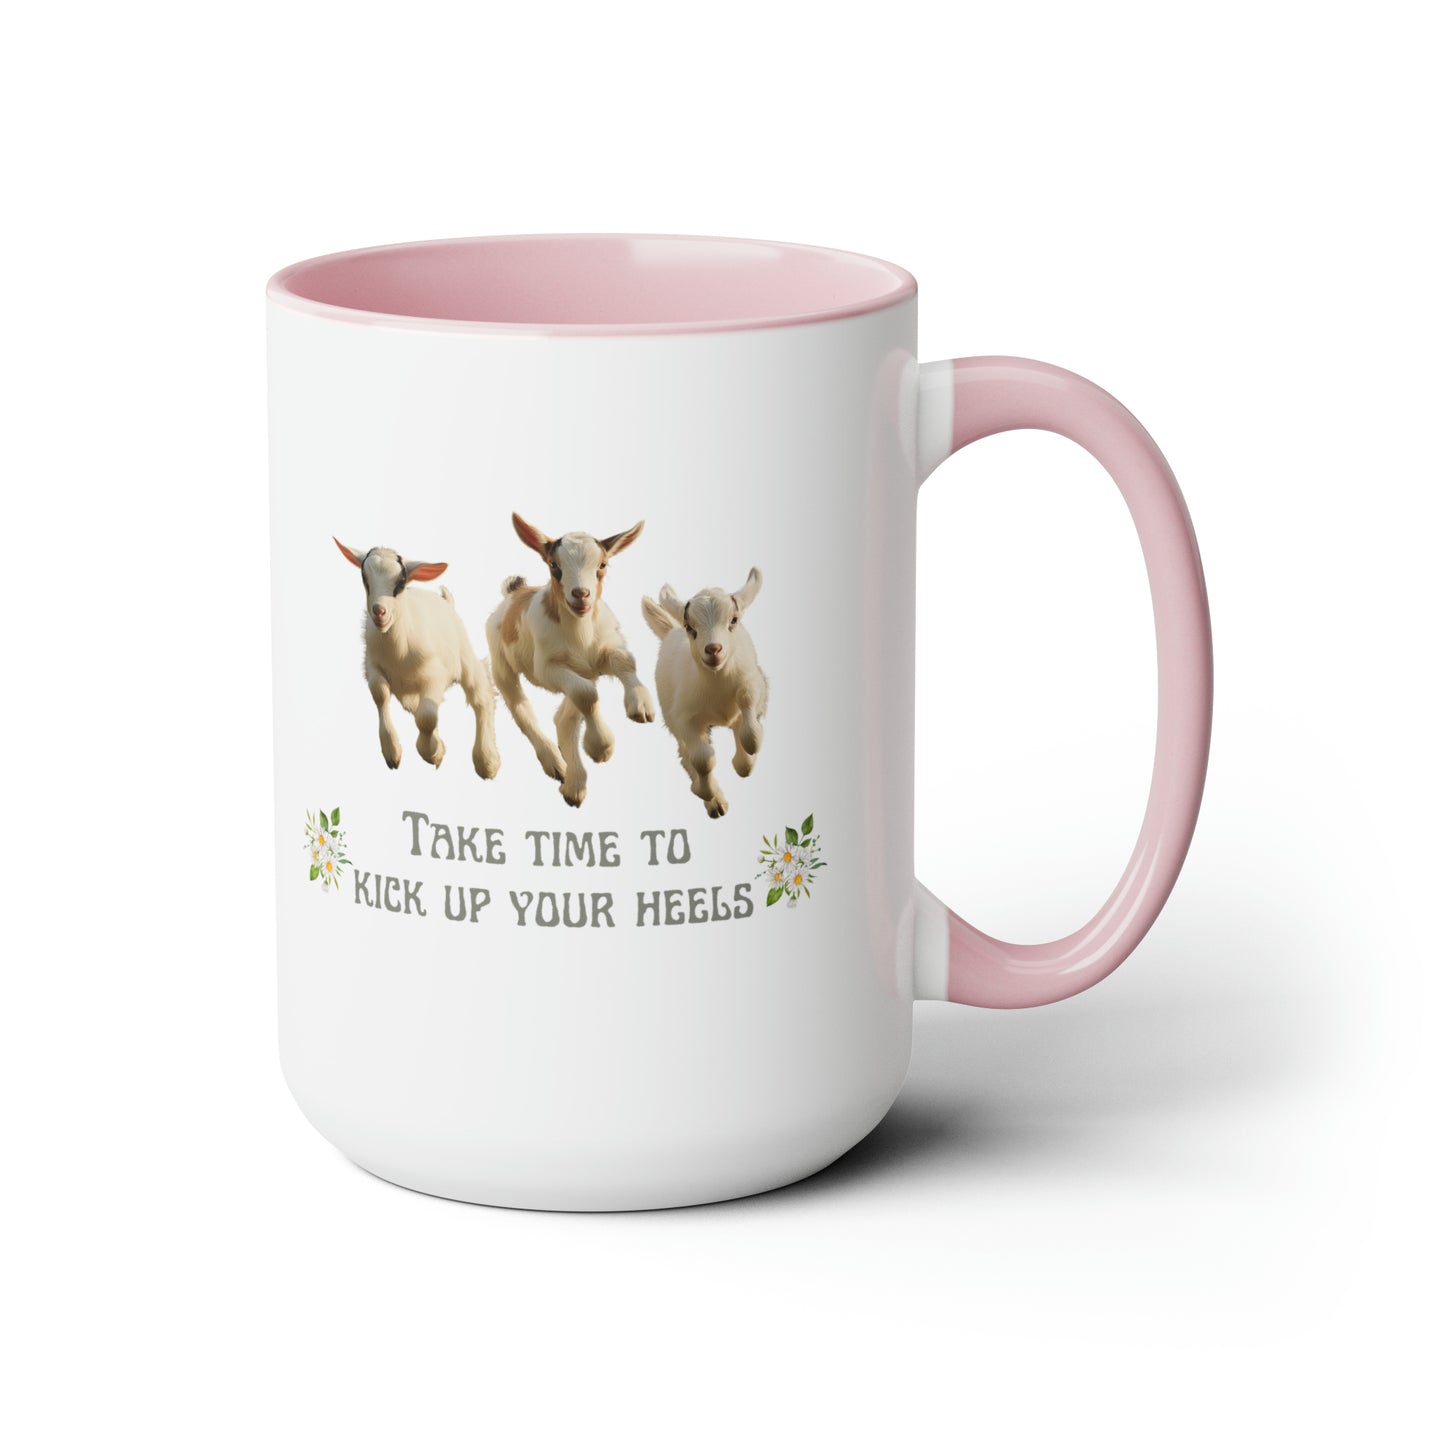 Cute Baby Goats Mug! Motivational